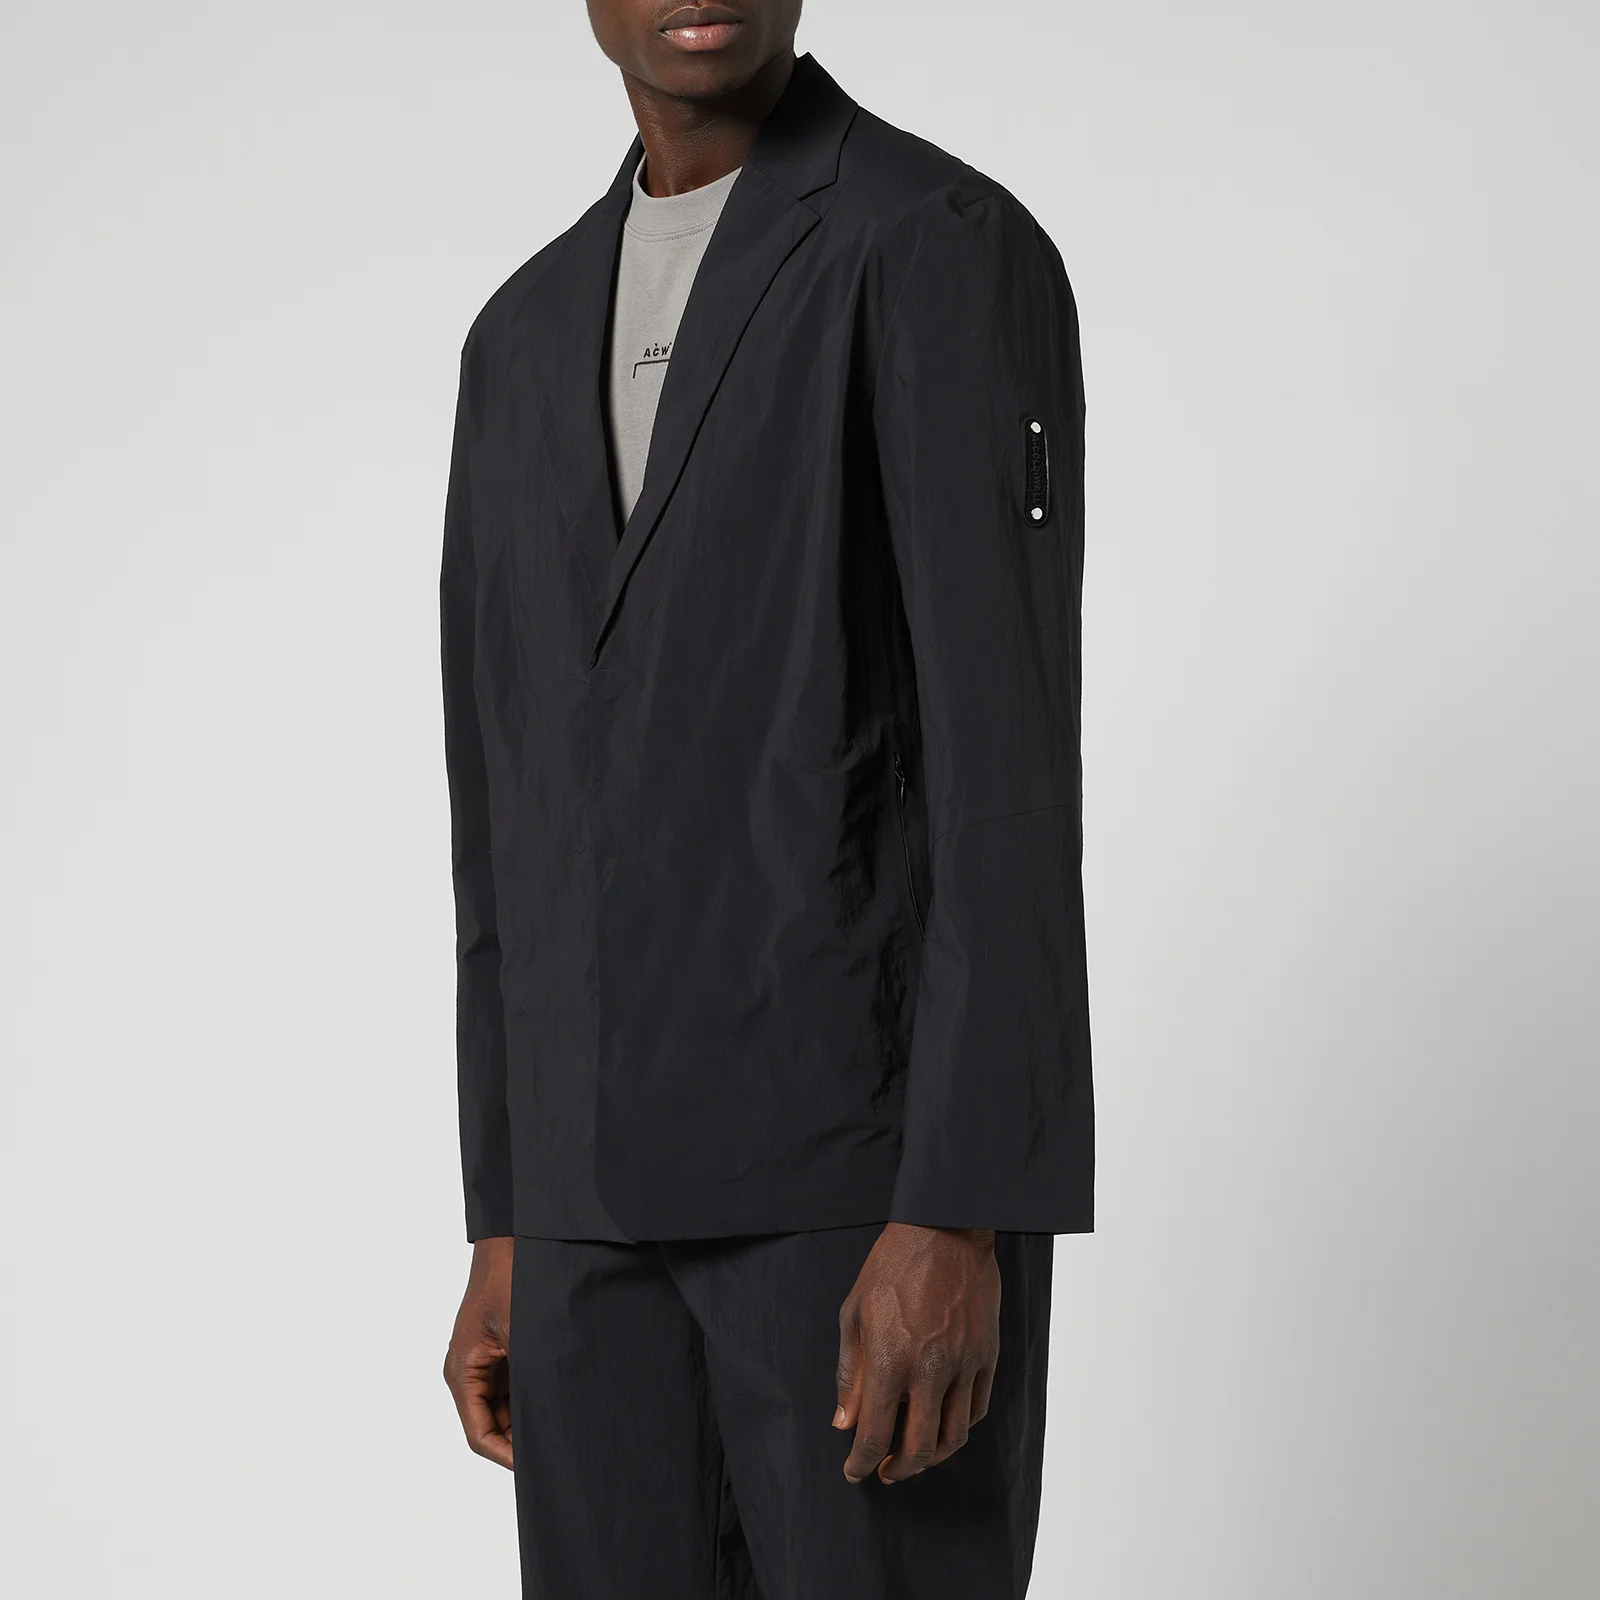 A-COLD-WALL* Men's Tech Tailoring Blazer - Black Image 1